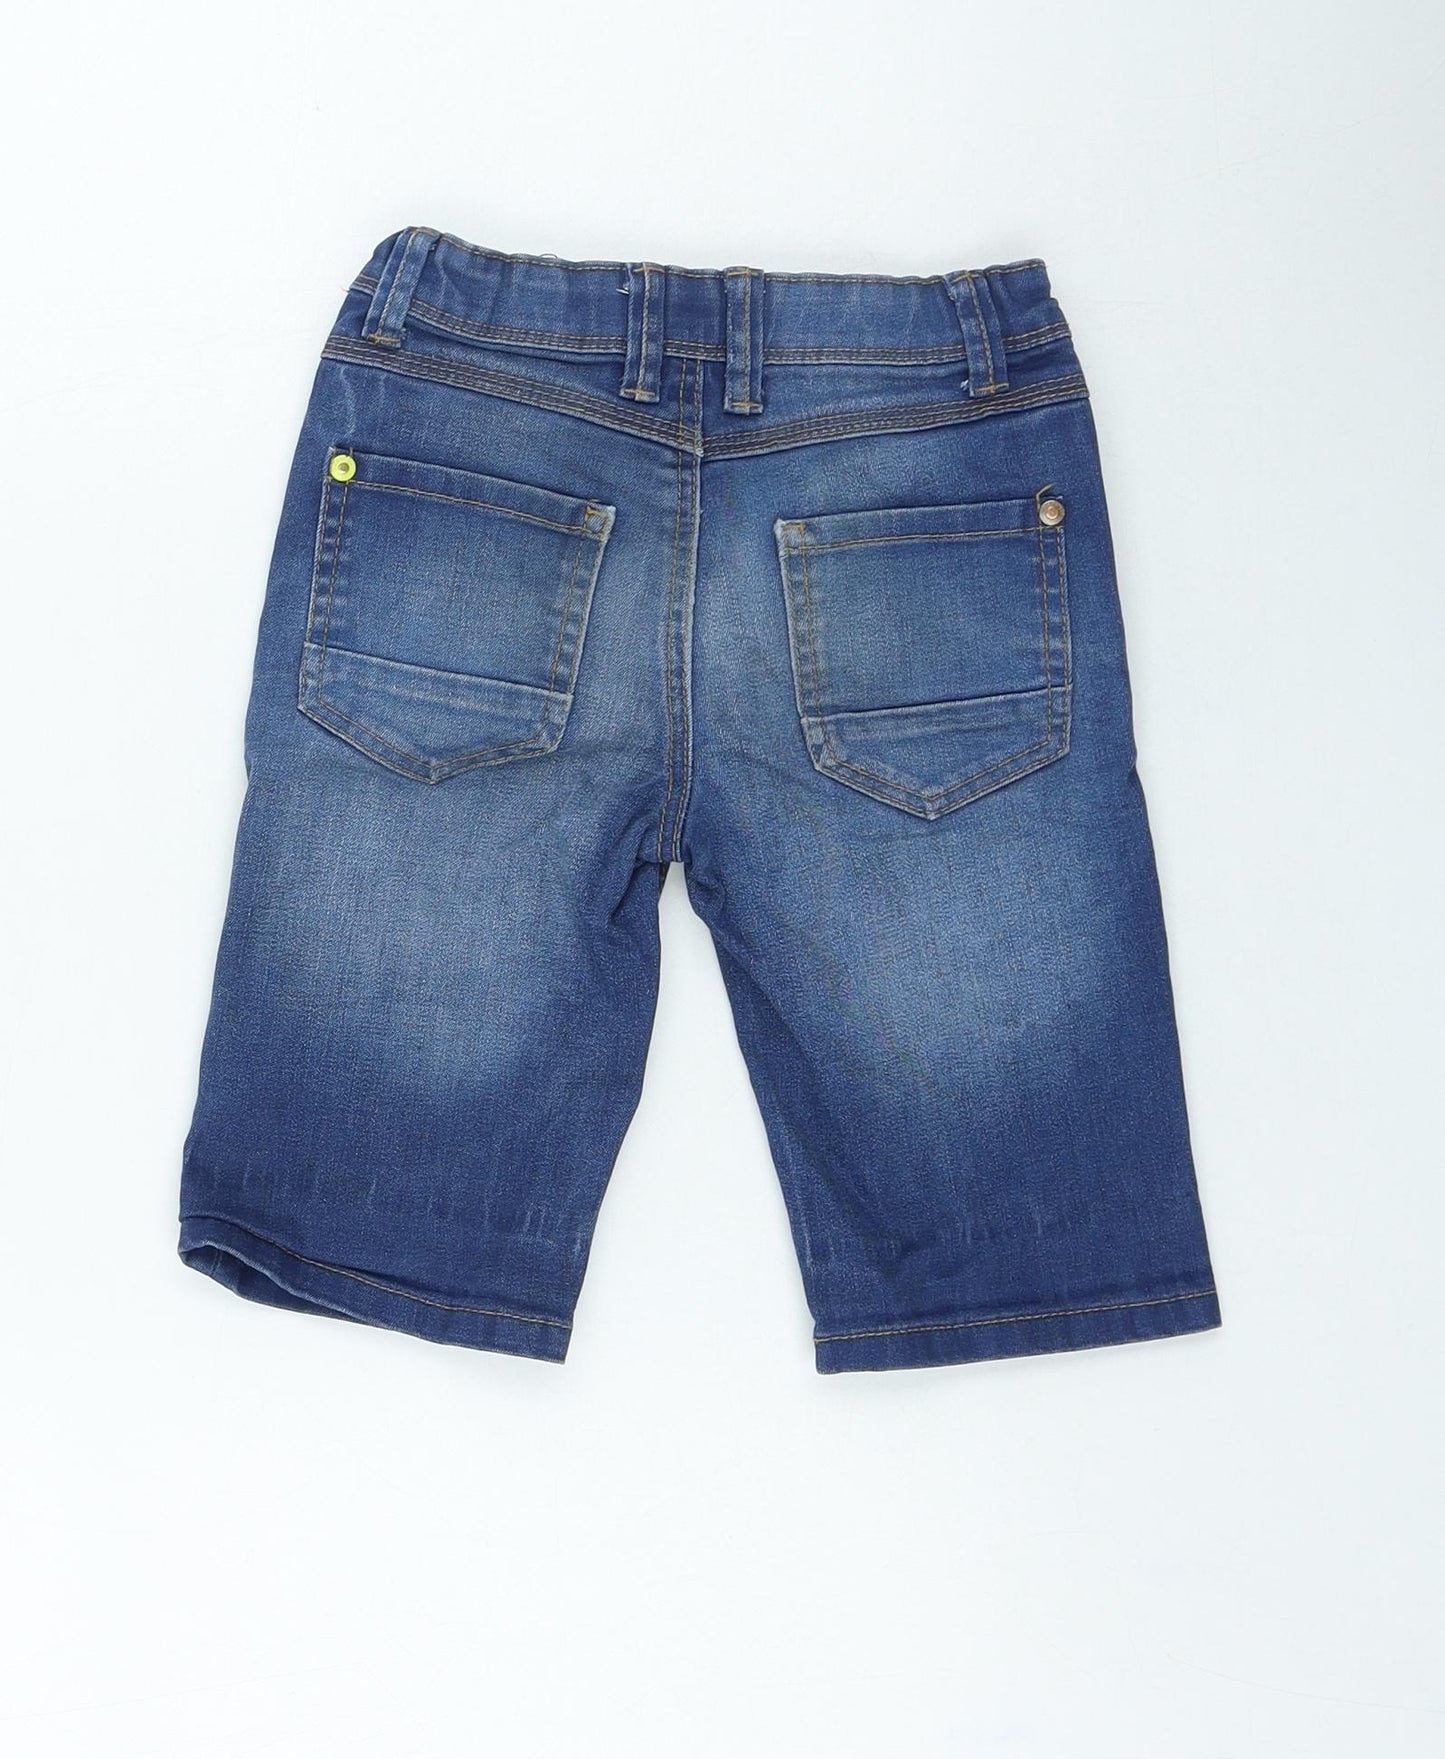 Denim & Co. Boys Blue Cotton Bermuda Shorts Size 6-7 Years Regular Buckle